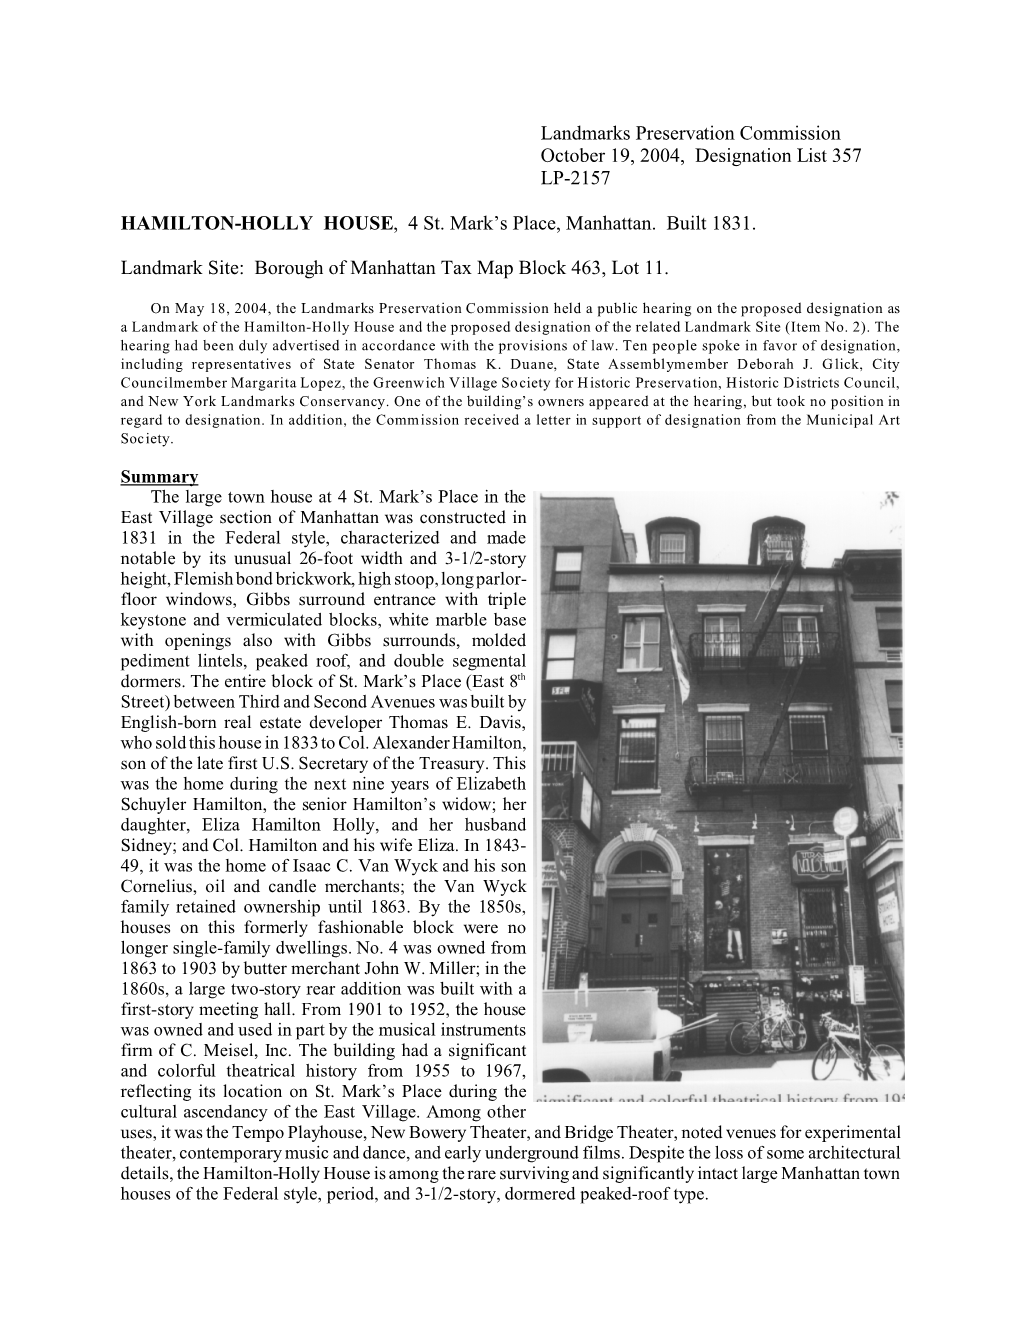 Hamilton-Holly House Designation Report